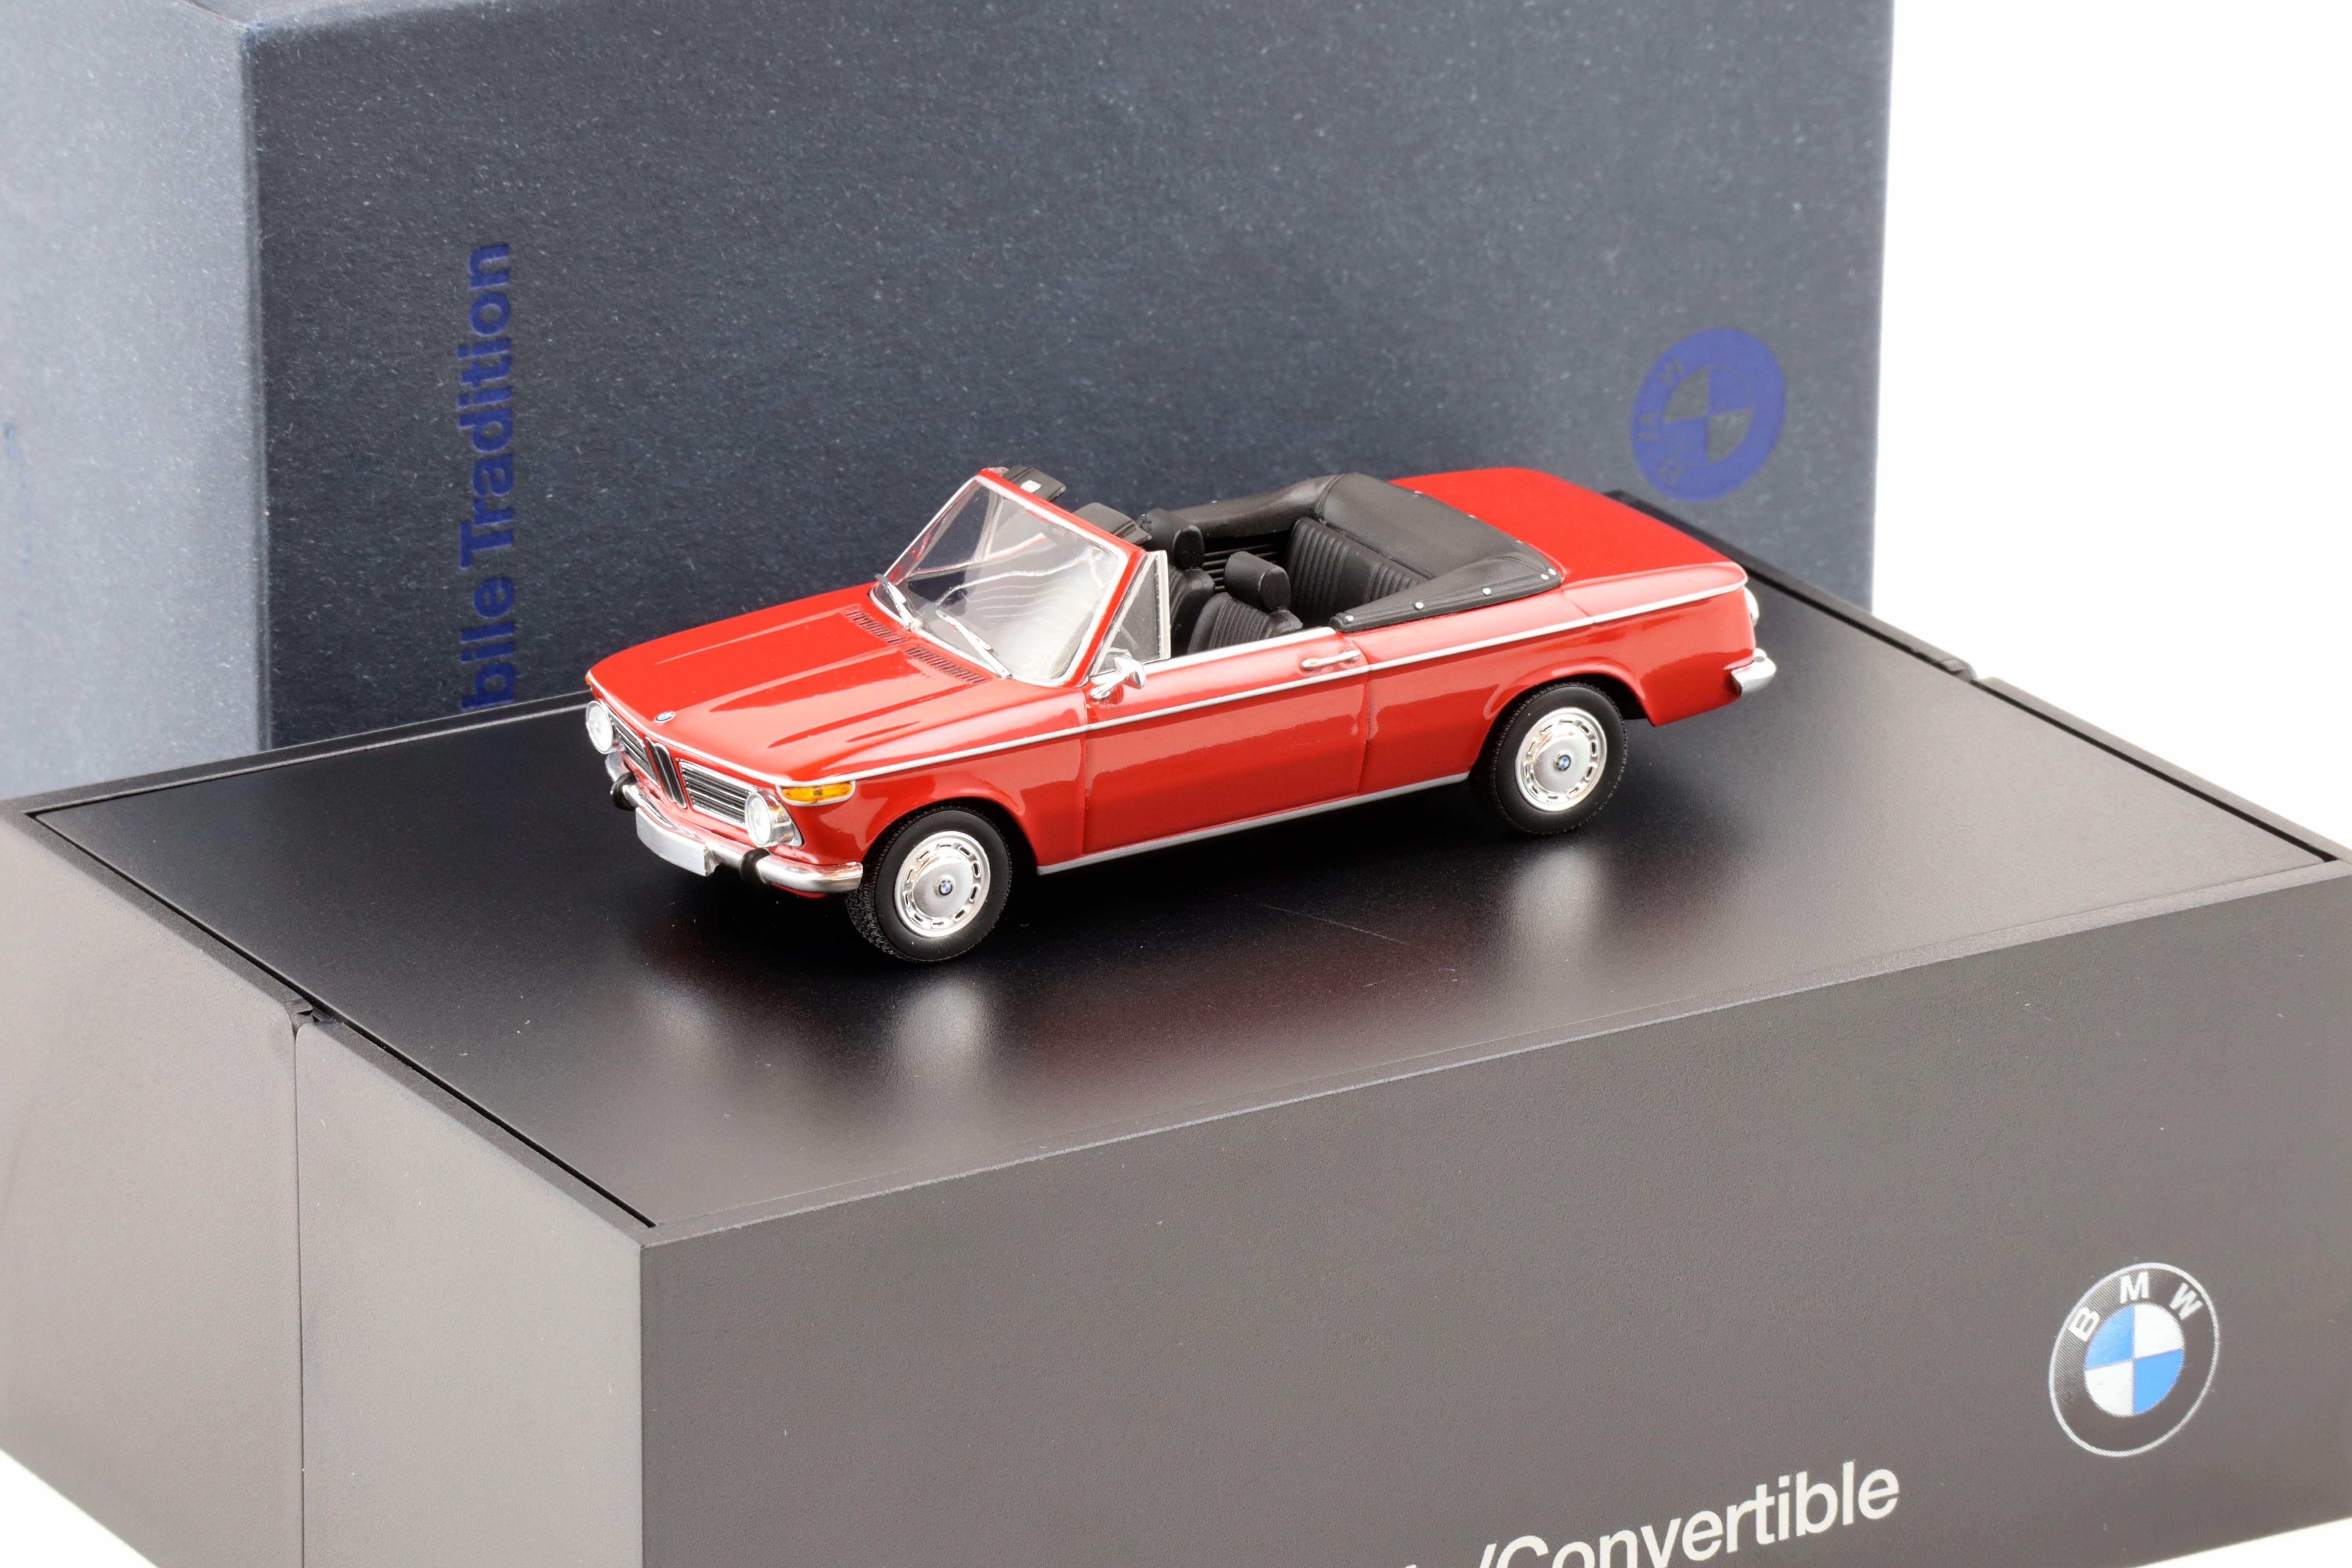 1:43 Minichamps BMW 1600 Convertible red DEALER VERSION